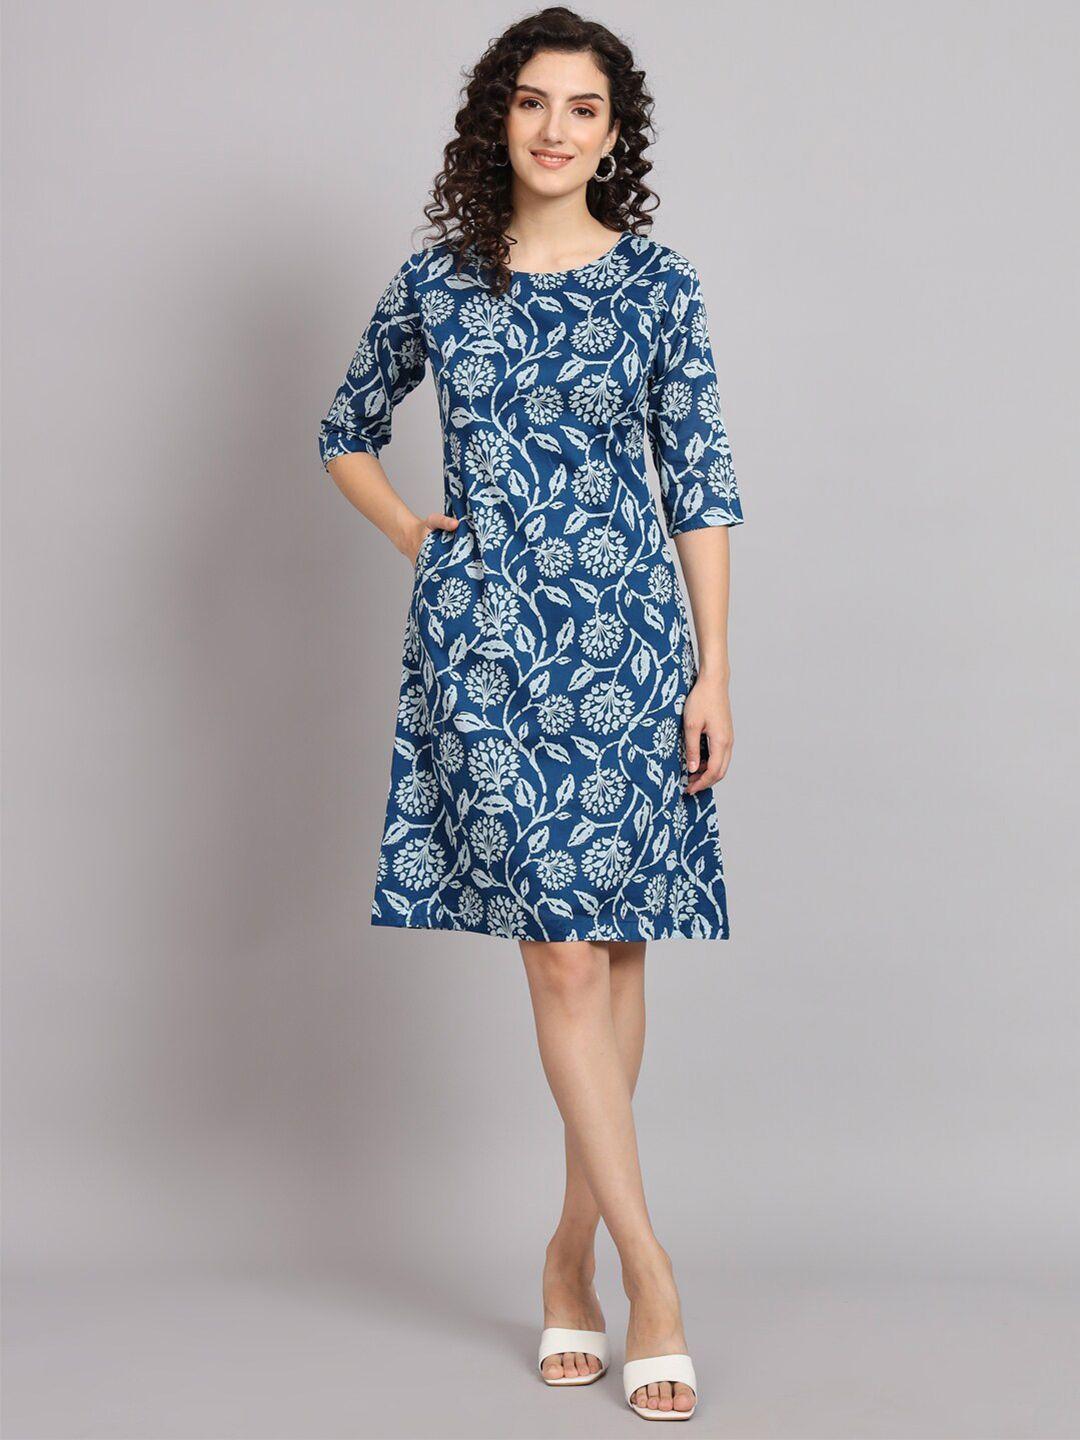 powersutra blue floral print a-line dress